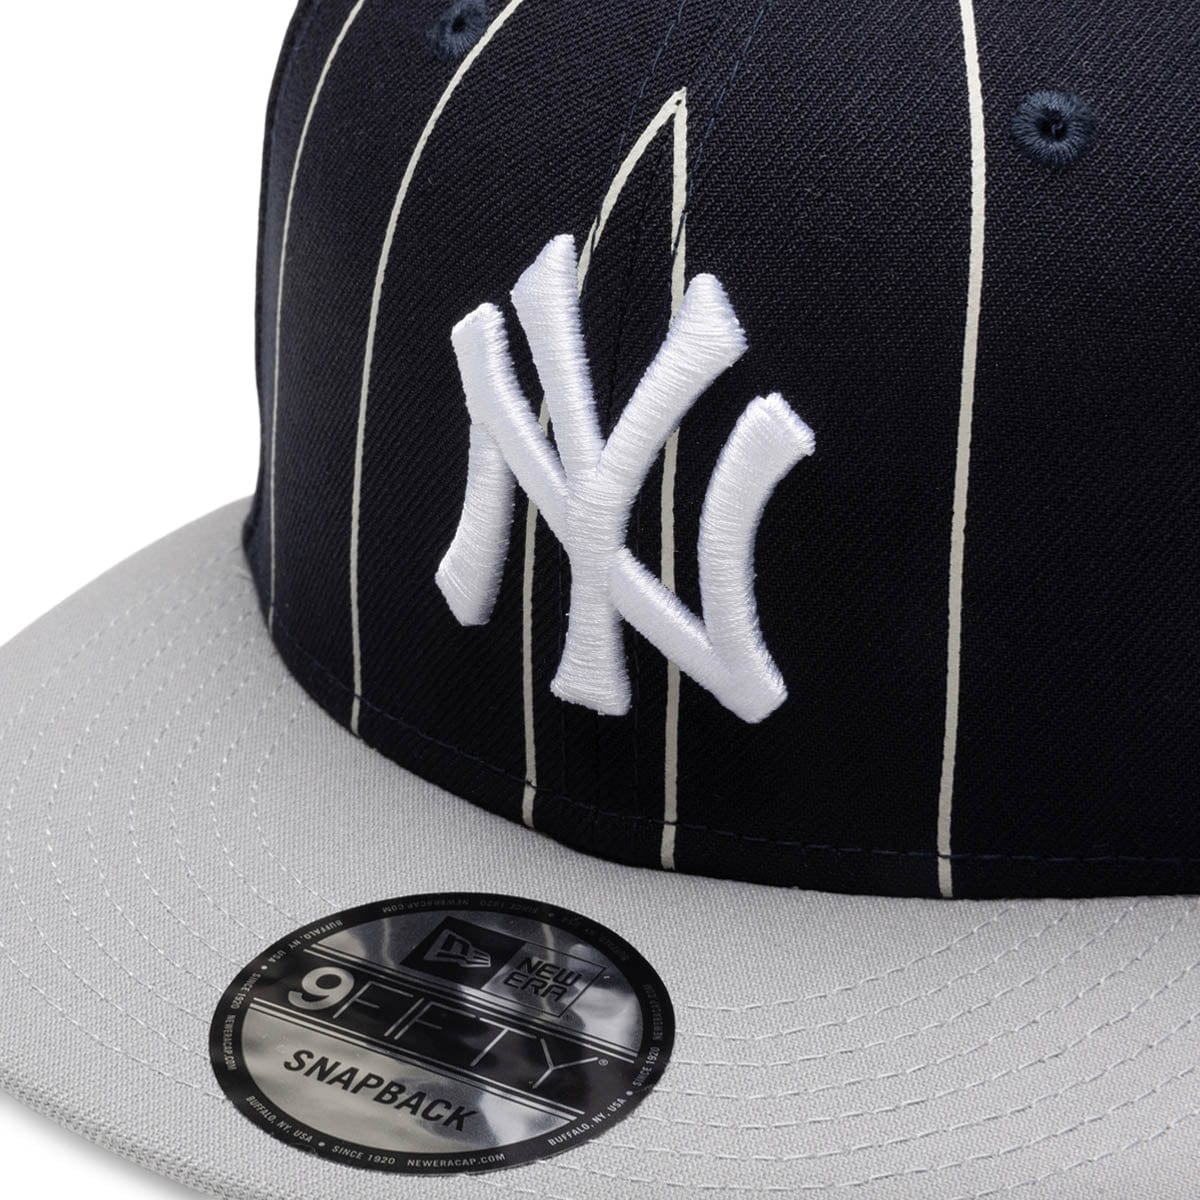 New York Yankees Vintage 9FIFTY Snapback Hat